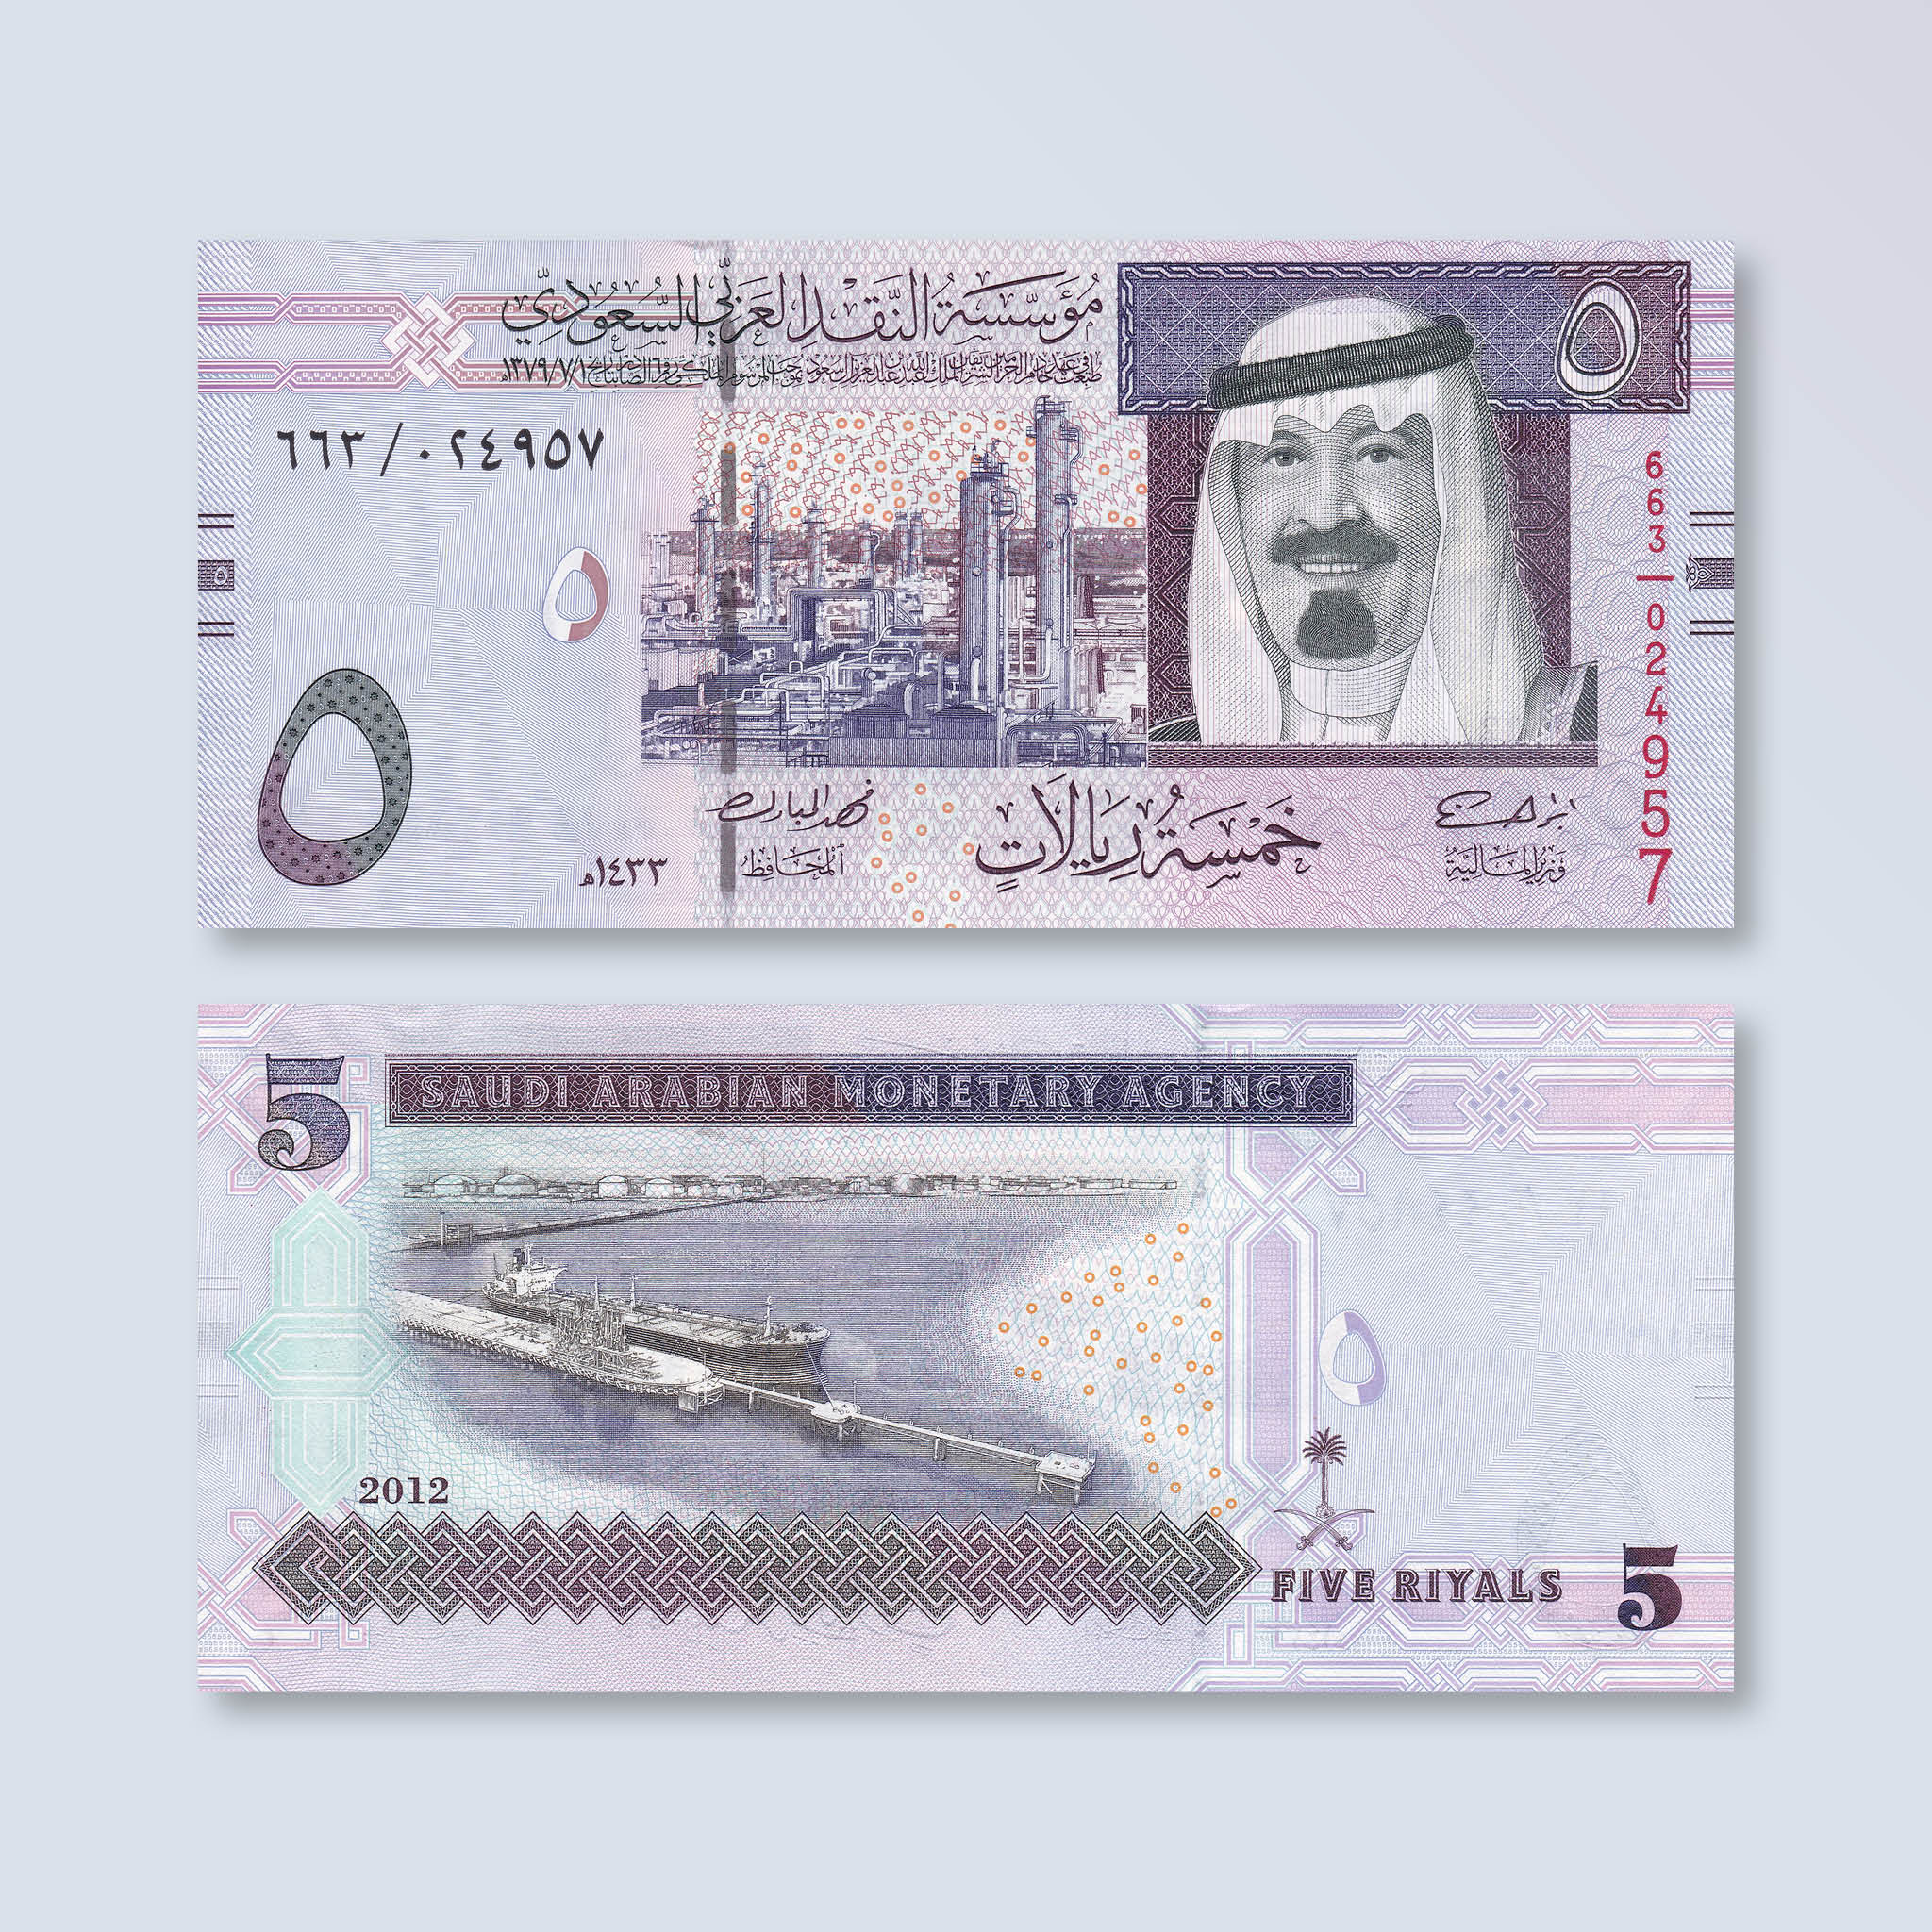 Saudi Arabia 5 Riyals, 2012, B131c, P32c, UNC - Robert's World Money - World Banknotes